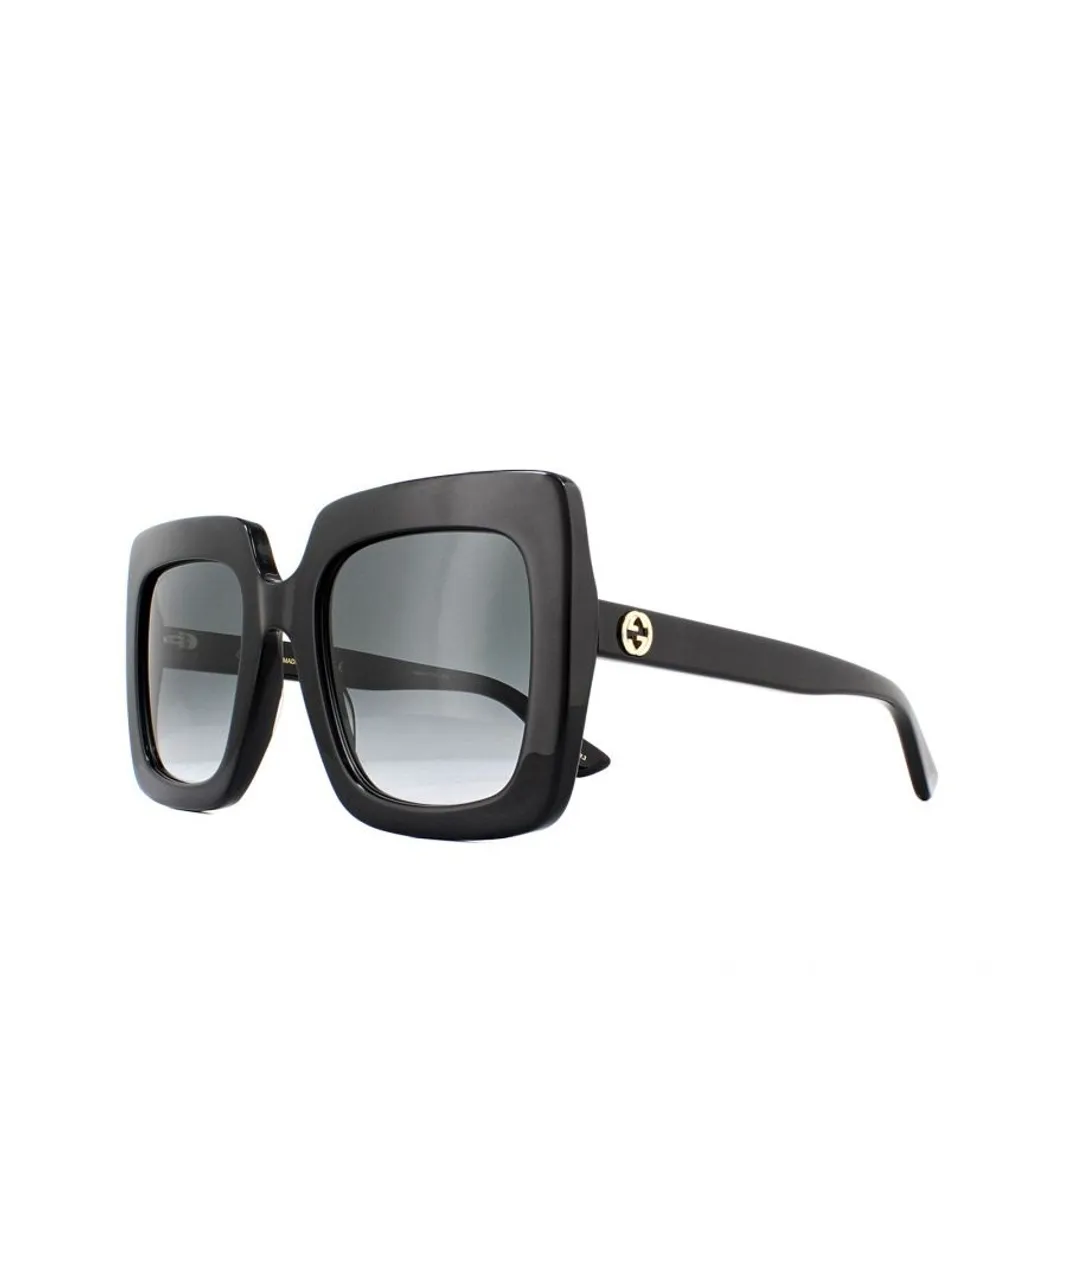 Gucci Womens Sunglasses GG0328S 001 Black Grey Gradient - One